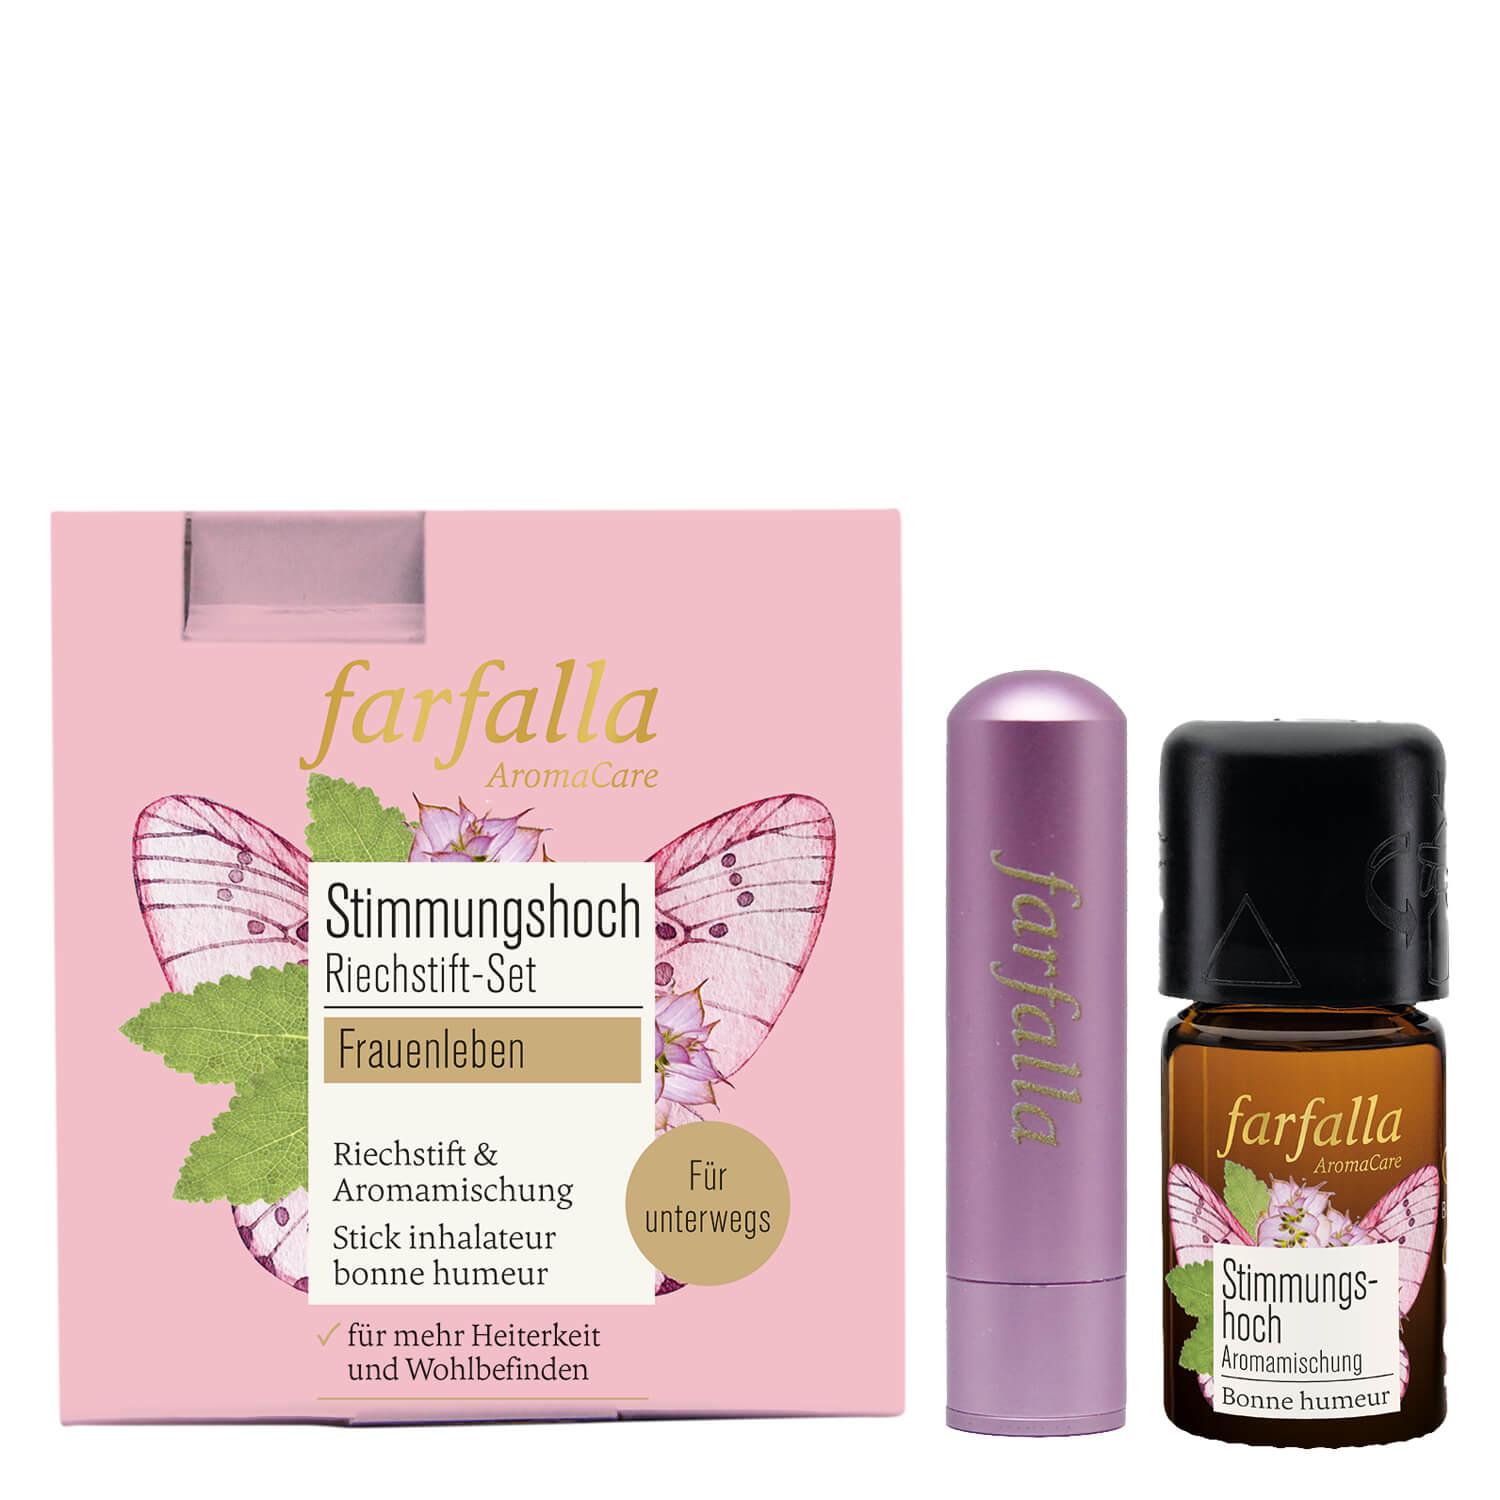 Farfalla Sets - Mood uplifting fragrance set to go